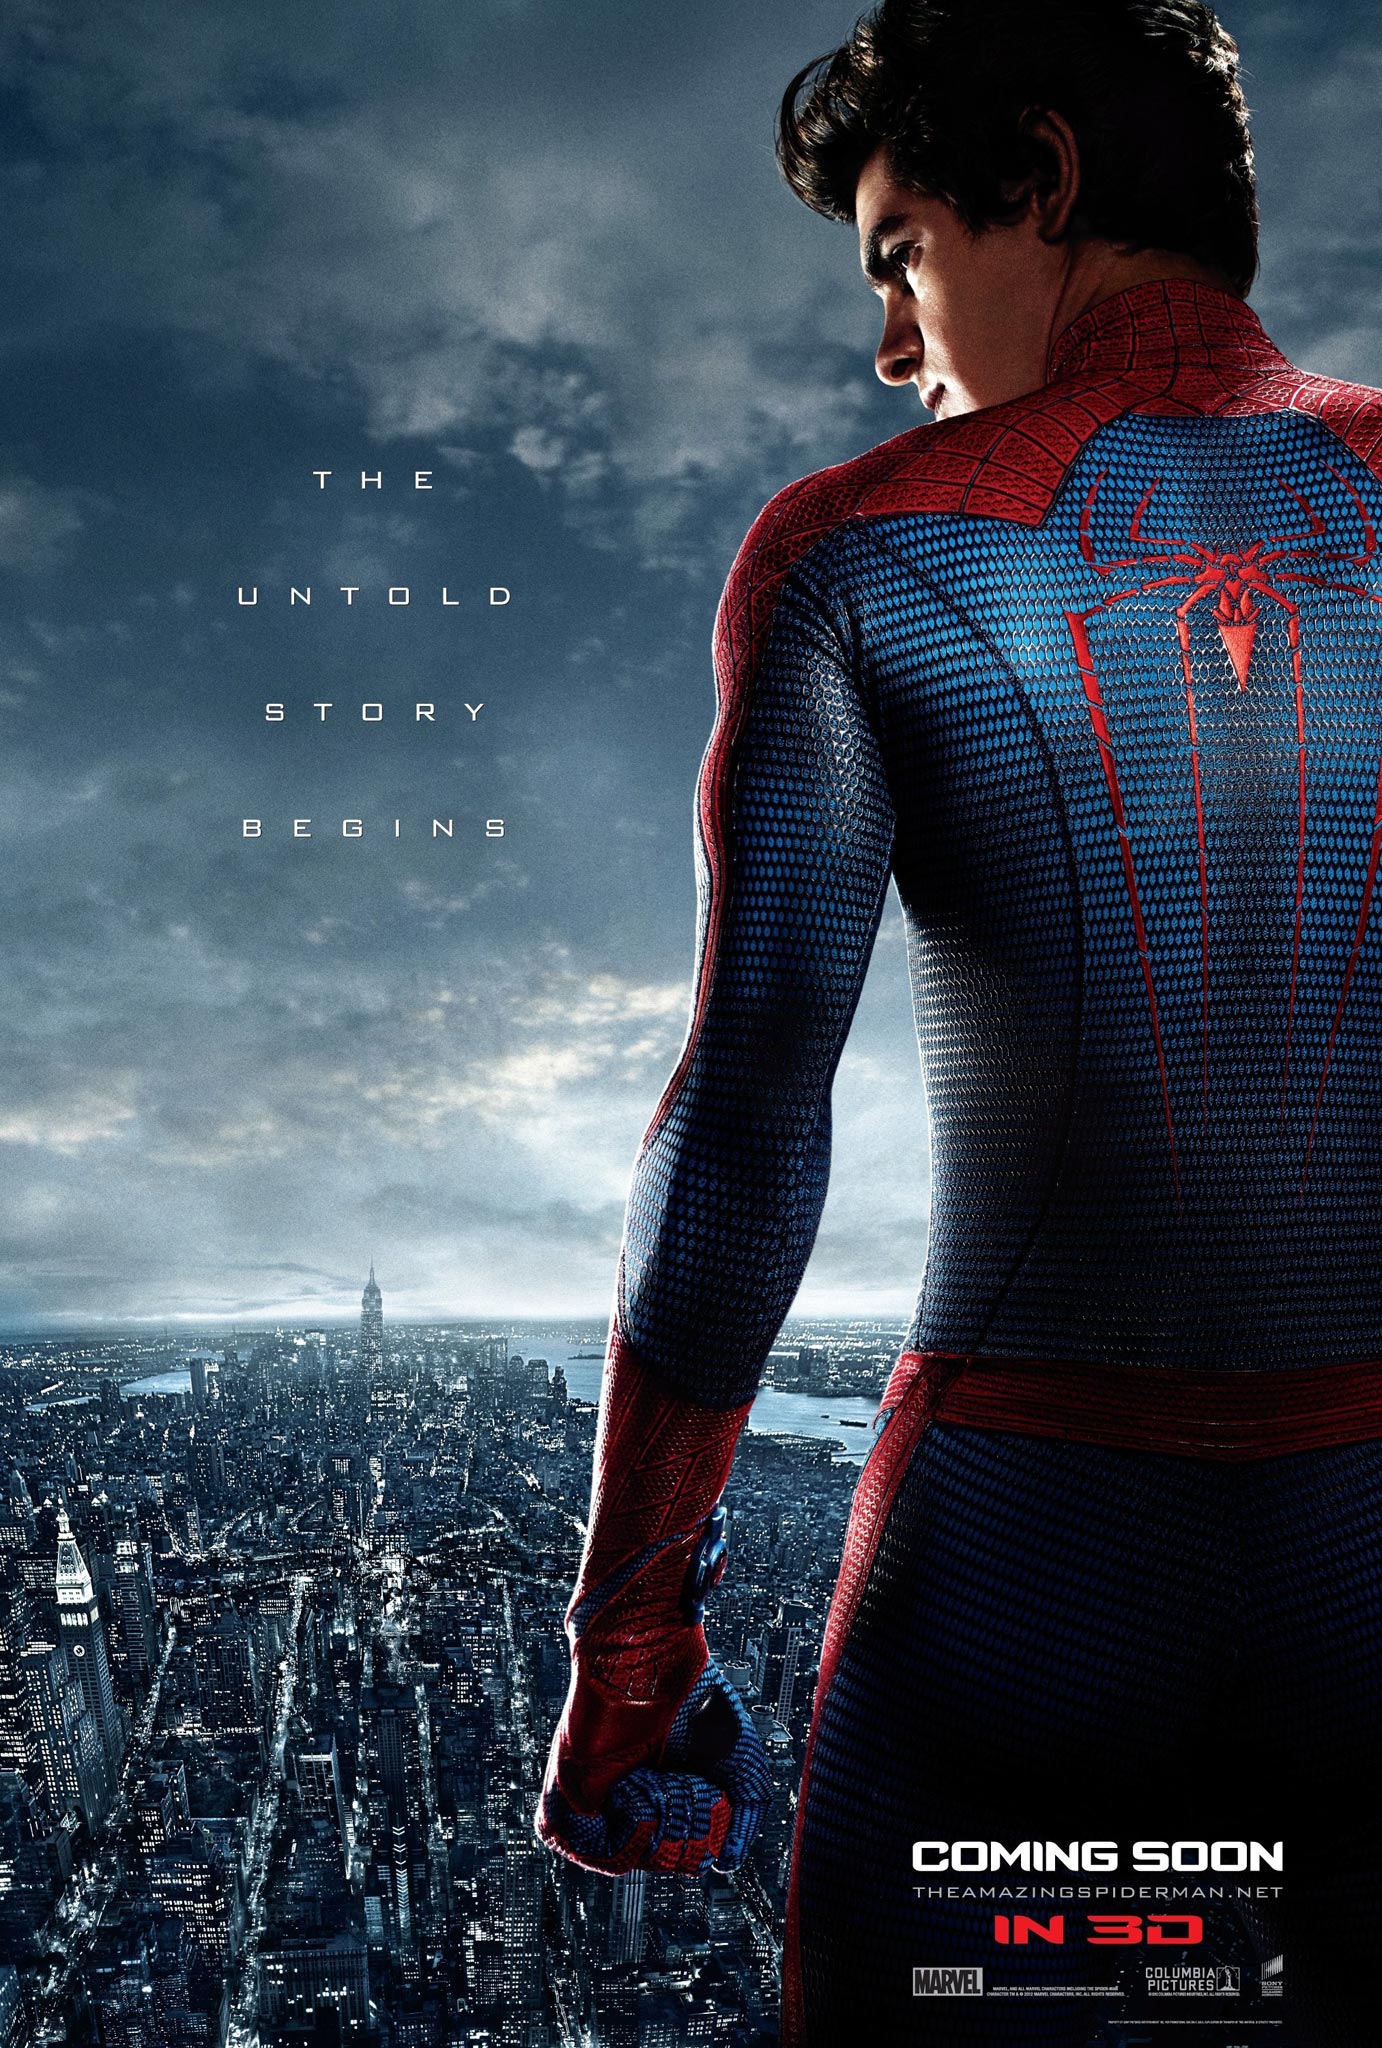 Stiahni si Filmy s titulkama Amazing Spider-Man / The Amazing Spider-Man (ENG + CZ tit.)(2012) = CSFD 65%